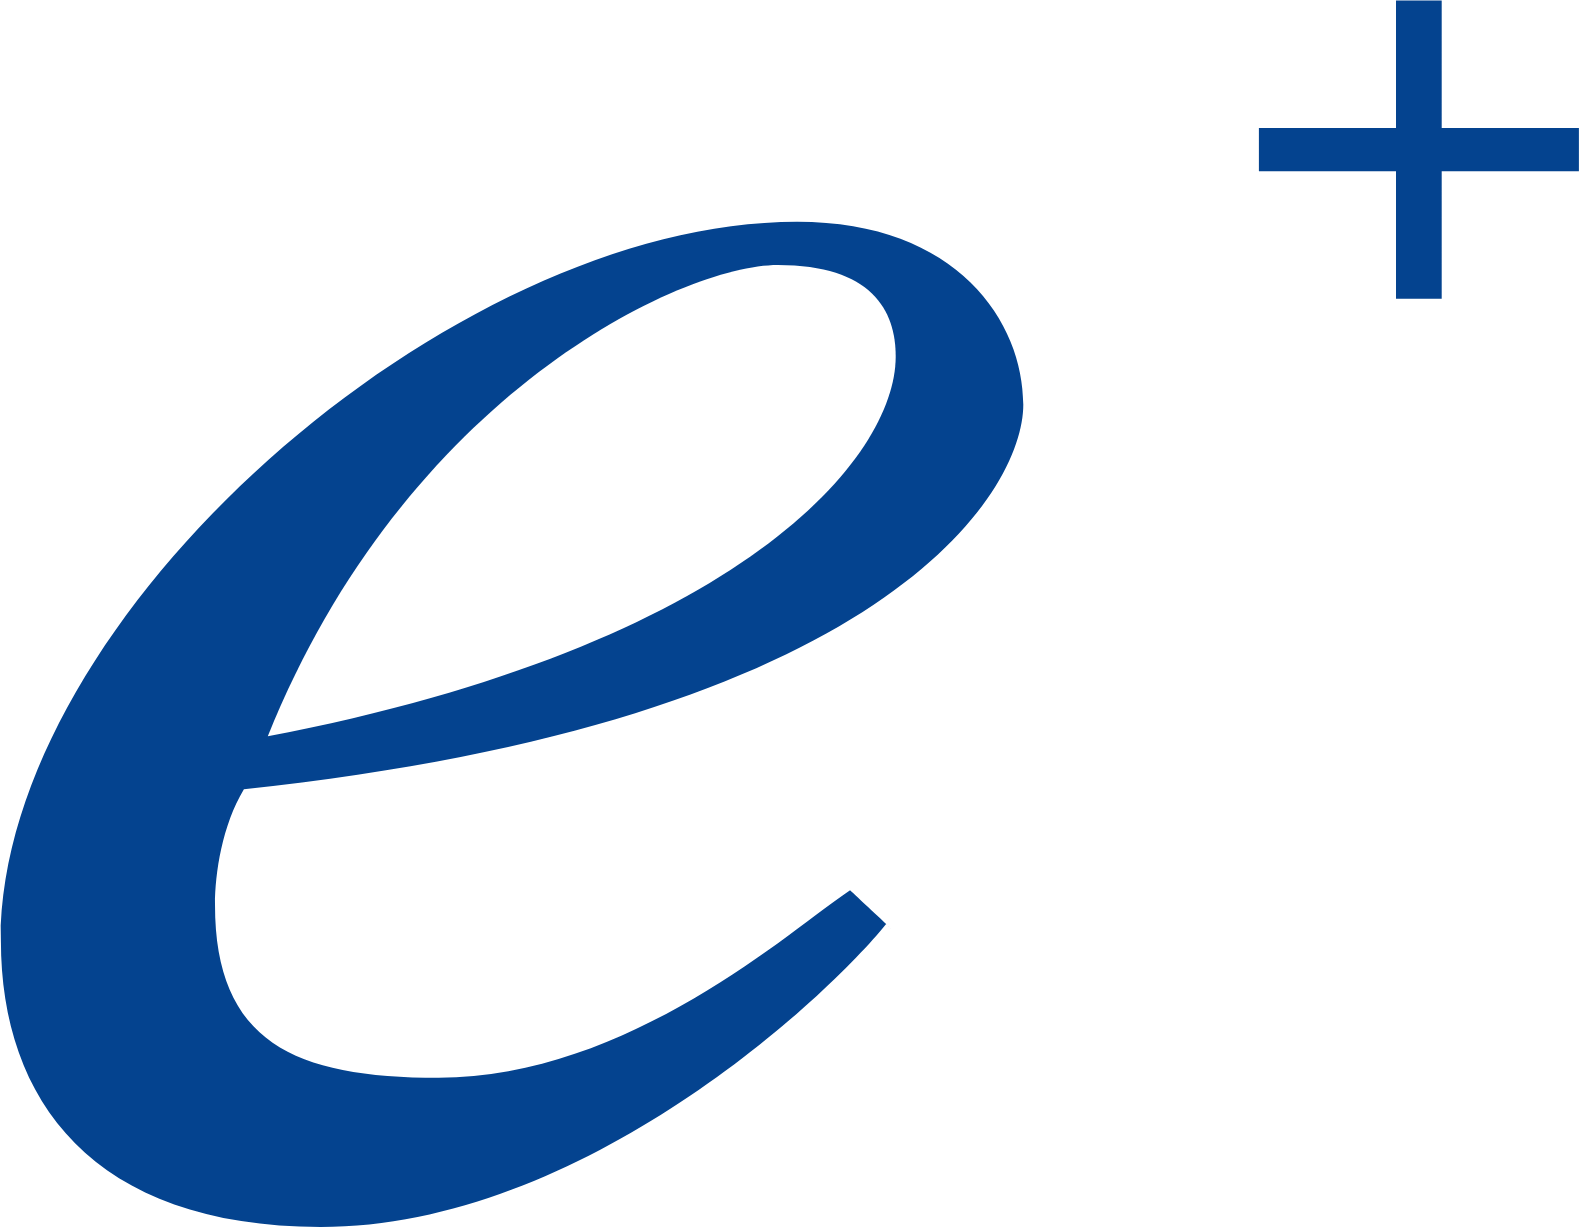 ePlus logo (transparent PNG)